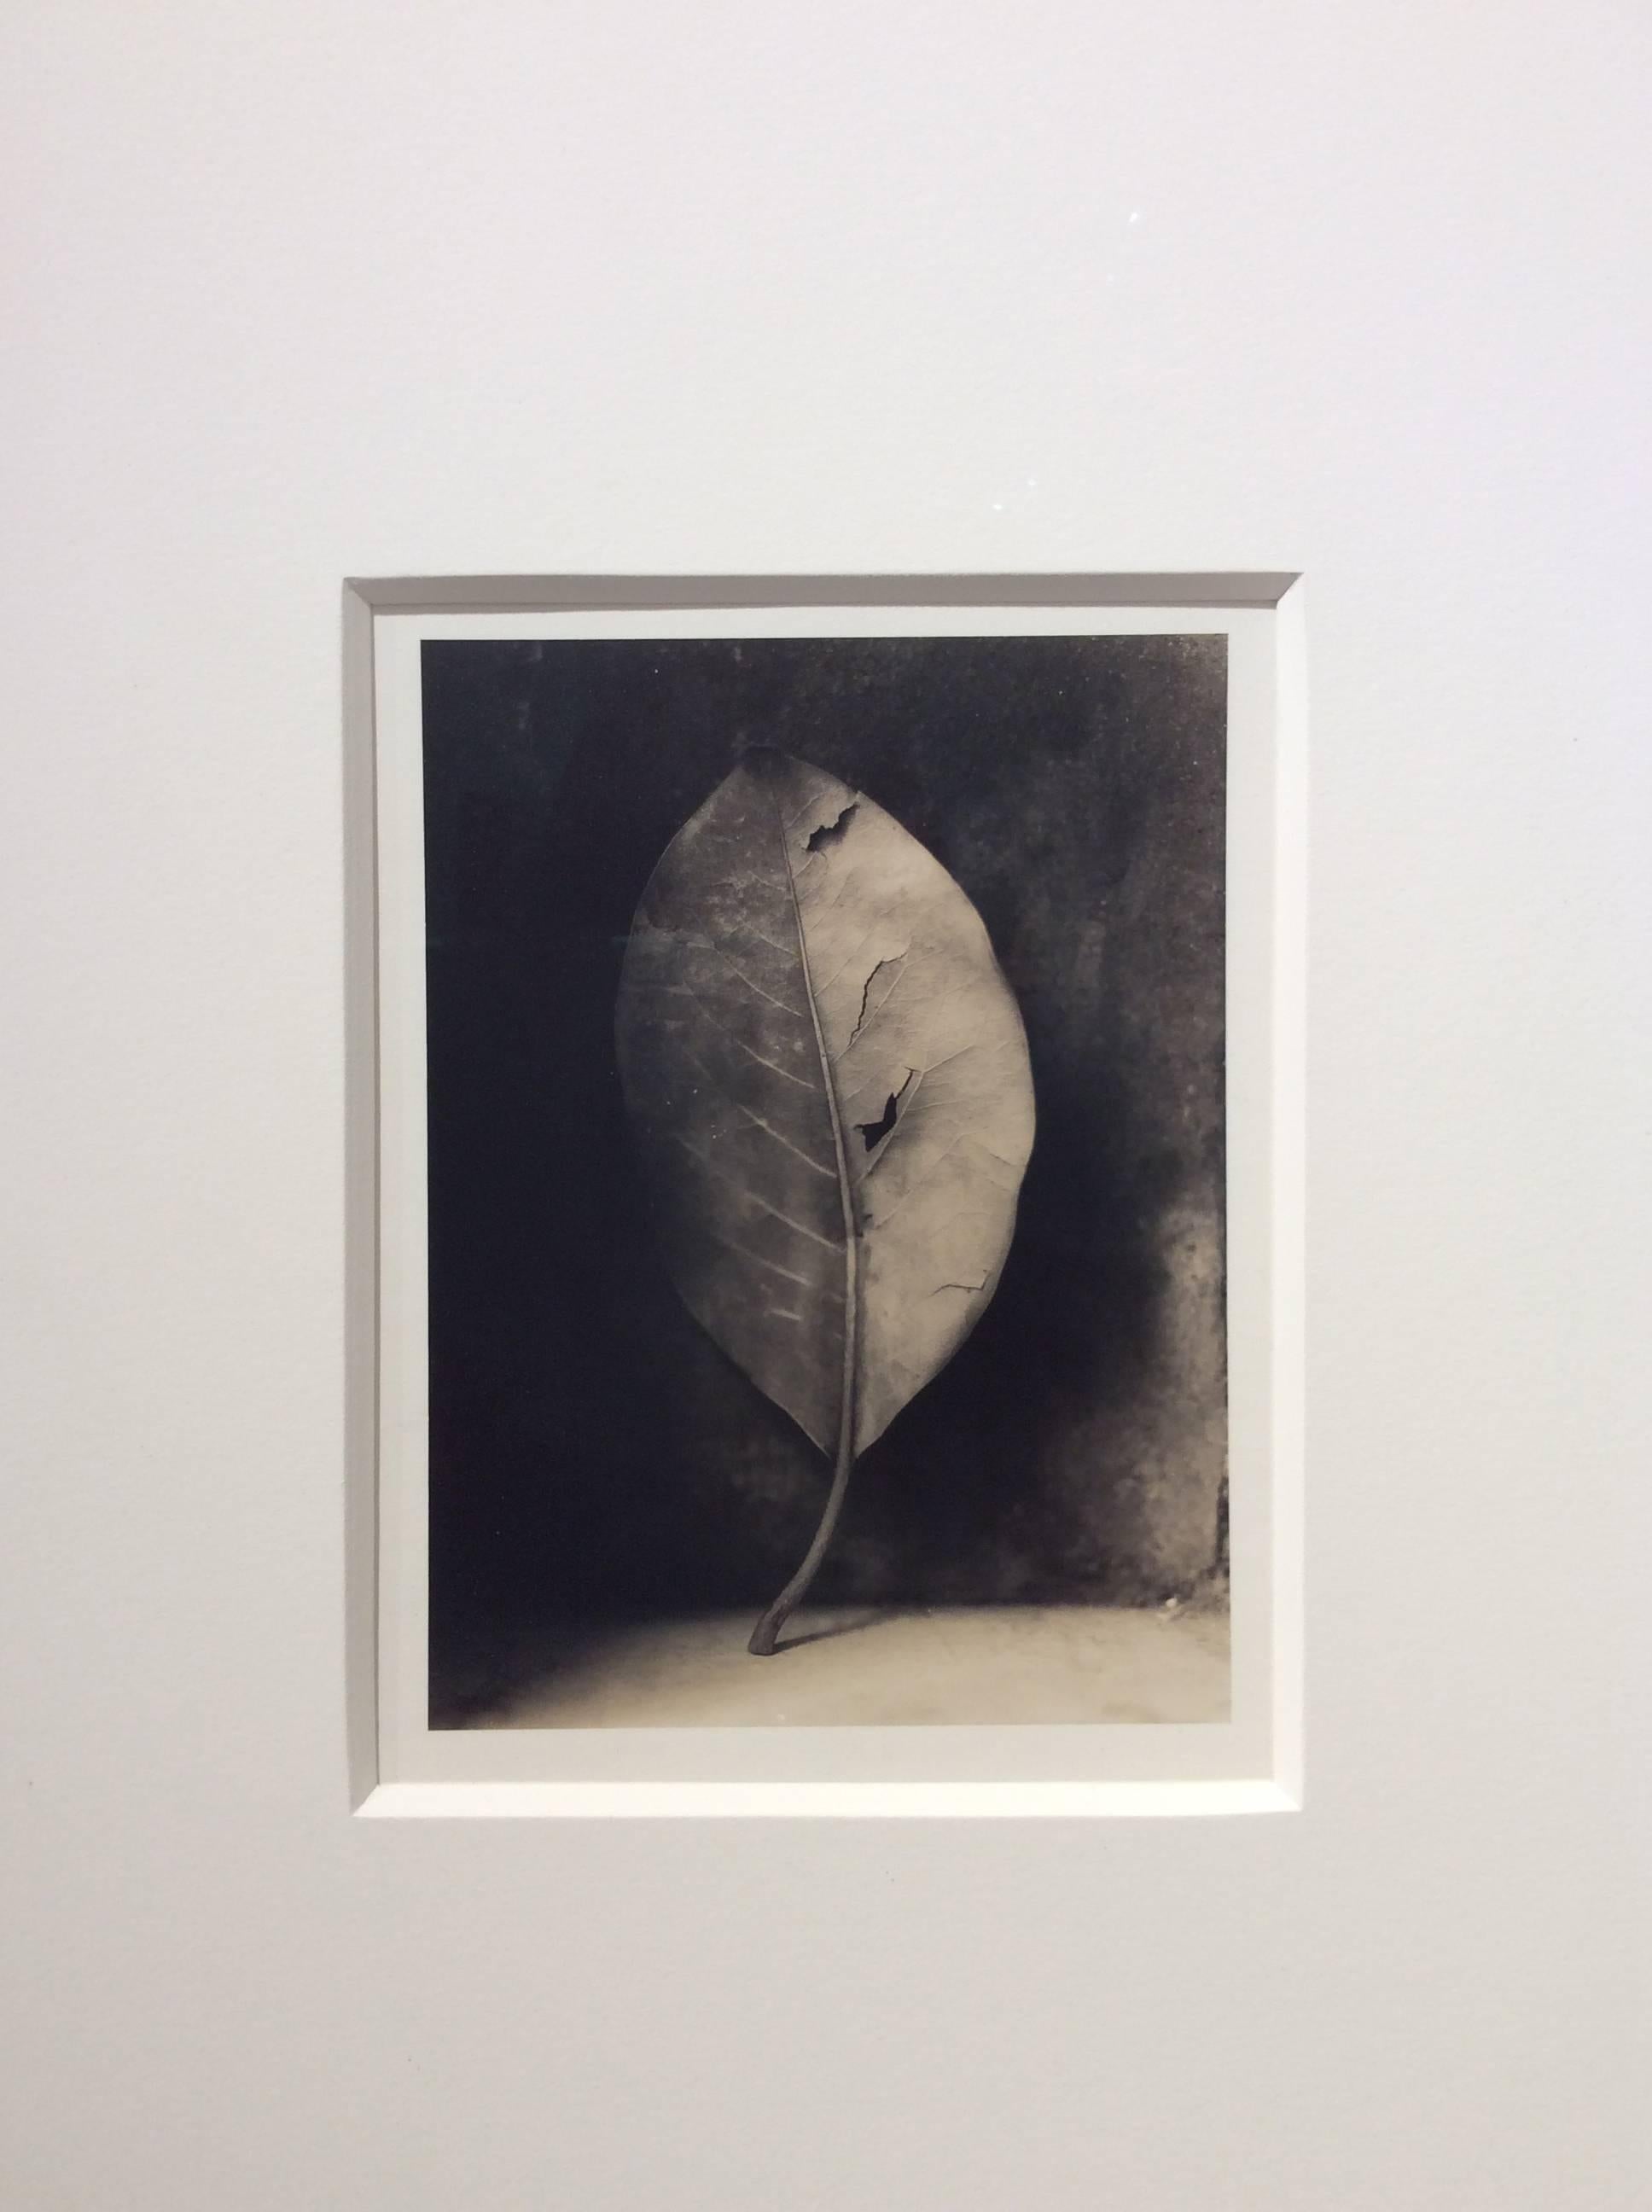 Magnolia Leaf (Framed Sepia Toned Still Life Photograph of Single Leaf) - Black Still-Life Photograph by David Halliday